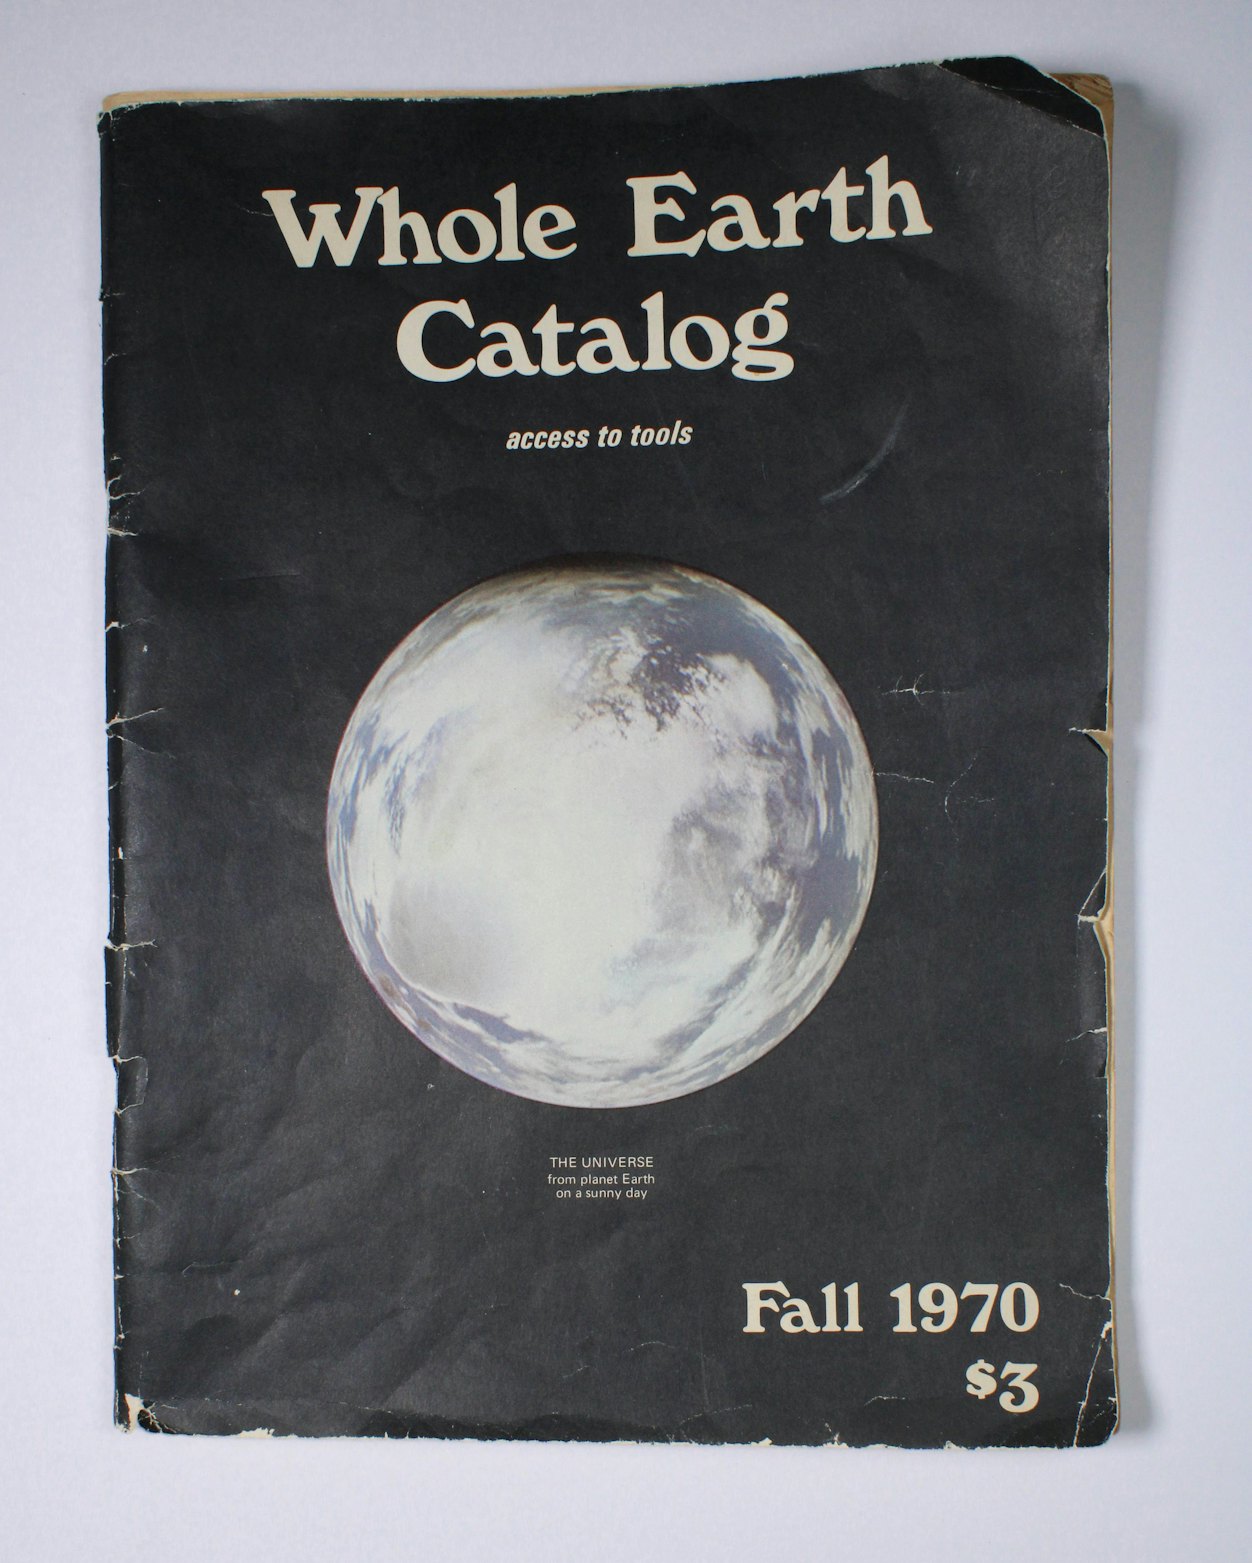 Whole Earth Catalog: access to tools